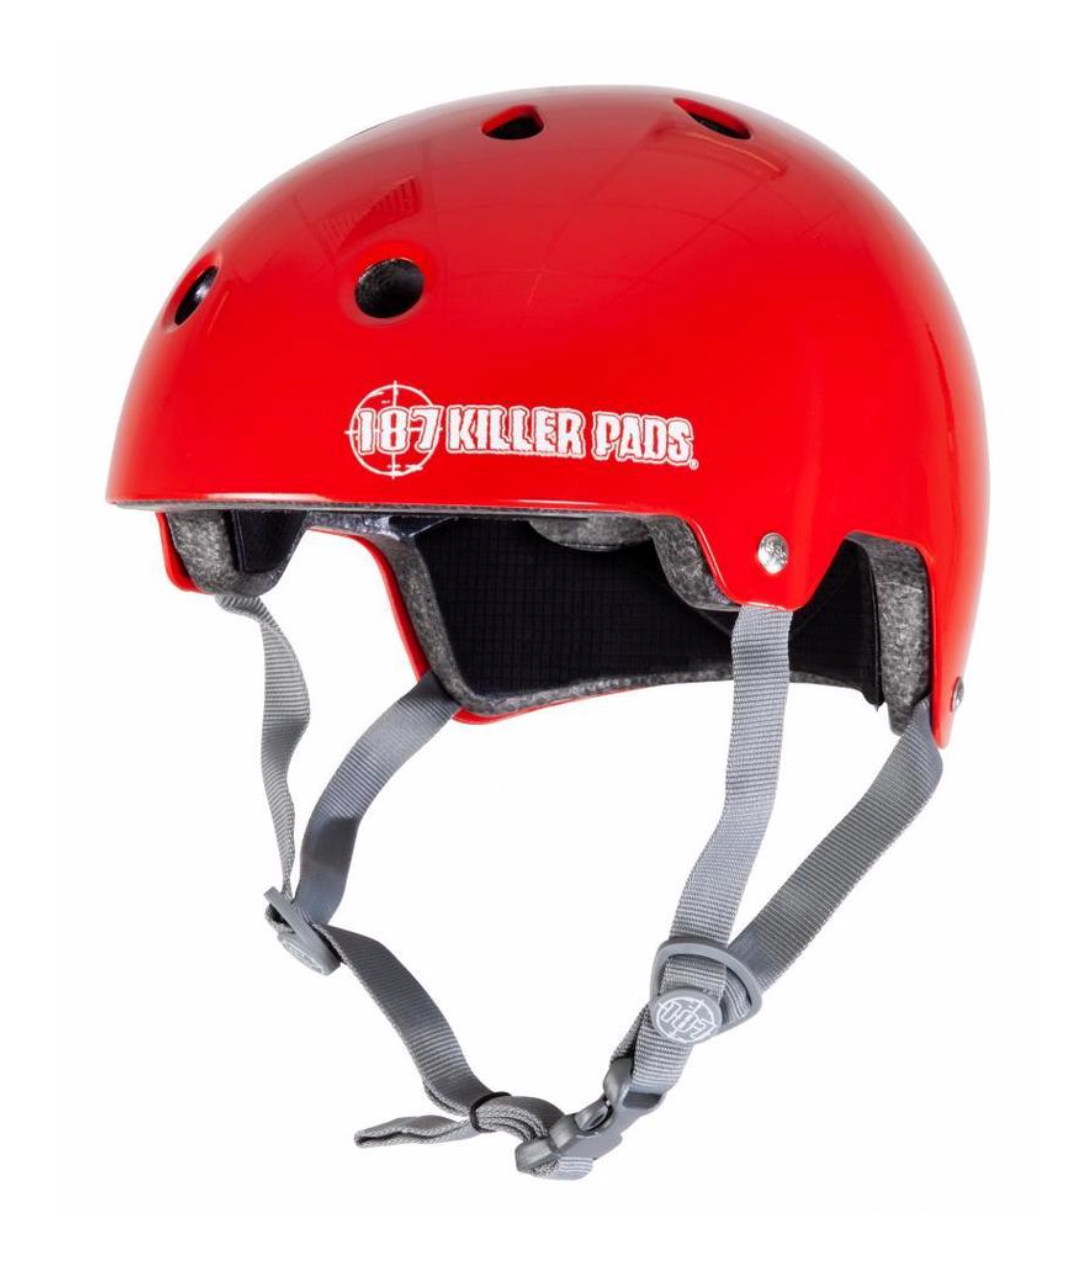 187 Killer Pads Certified Helmet - Gloss Red